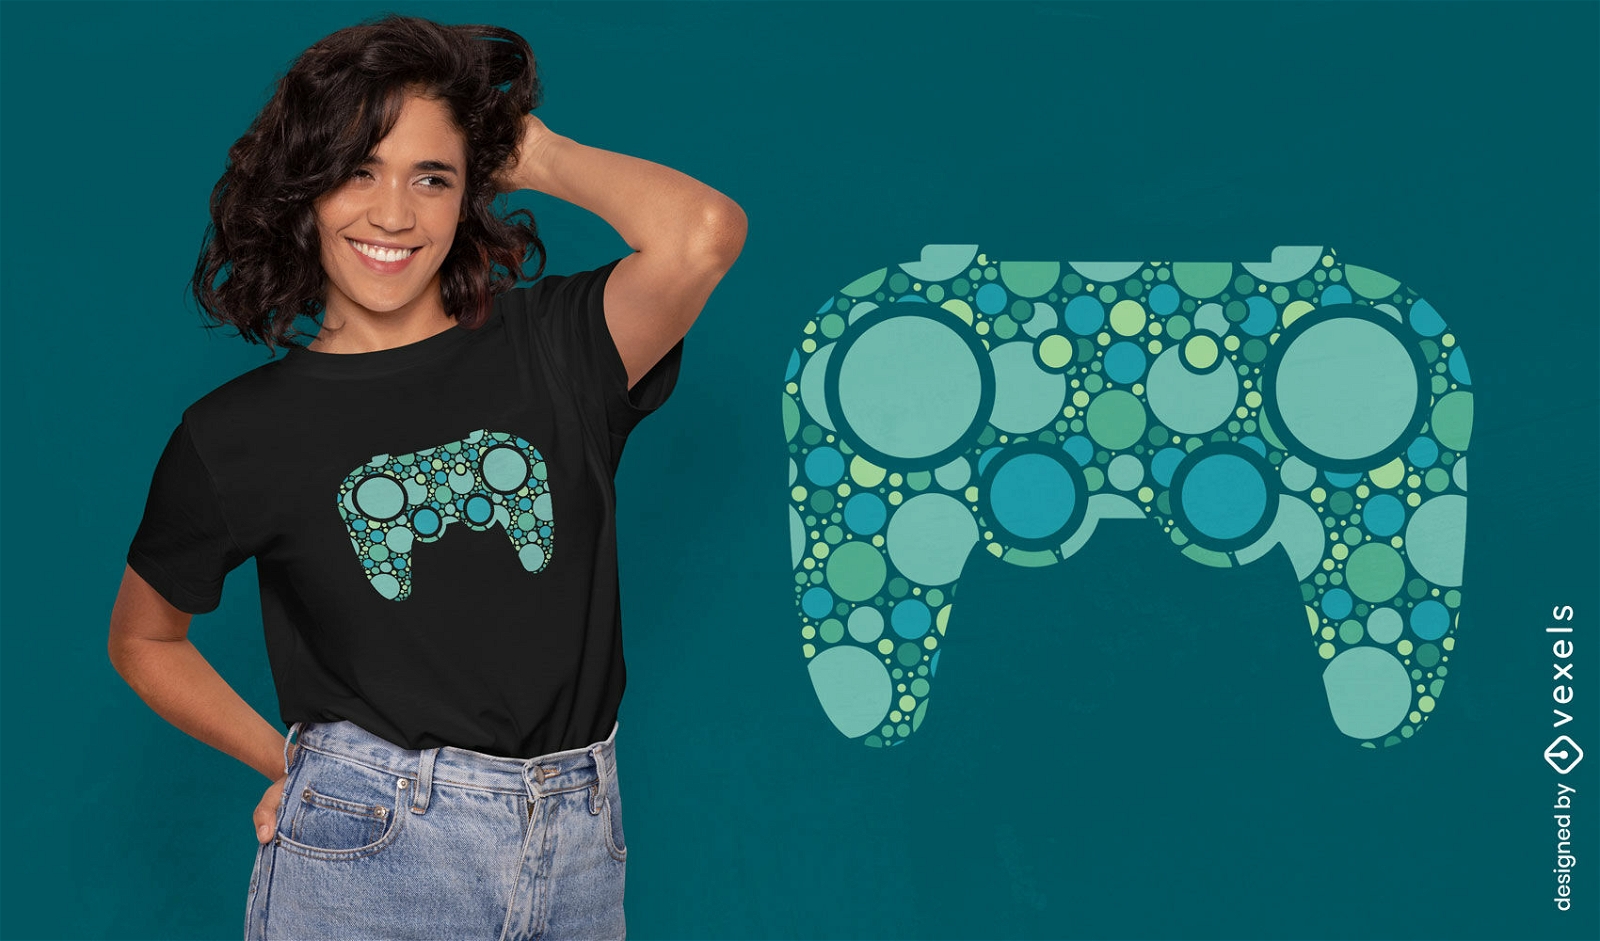 Grenn polka dots joystick t-shirt design